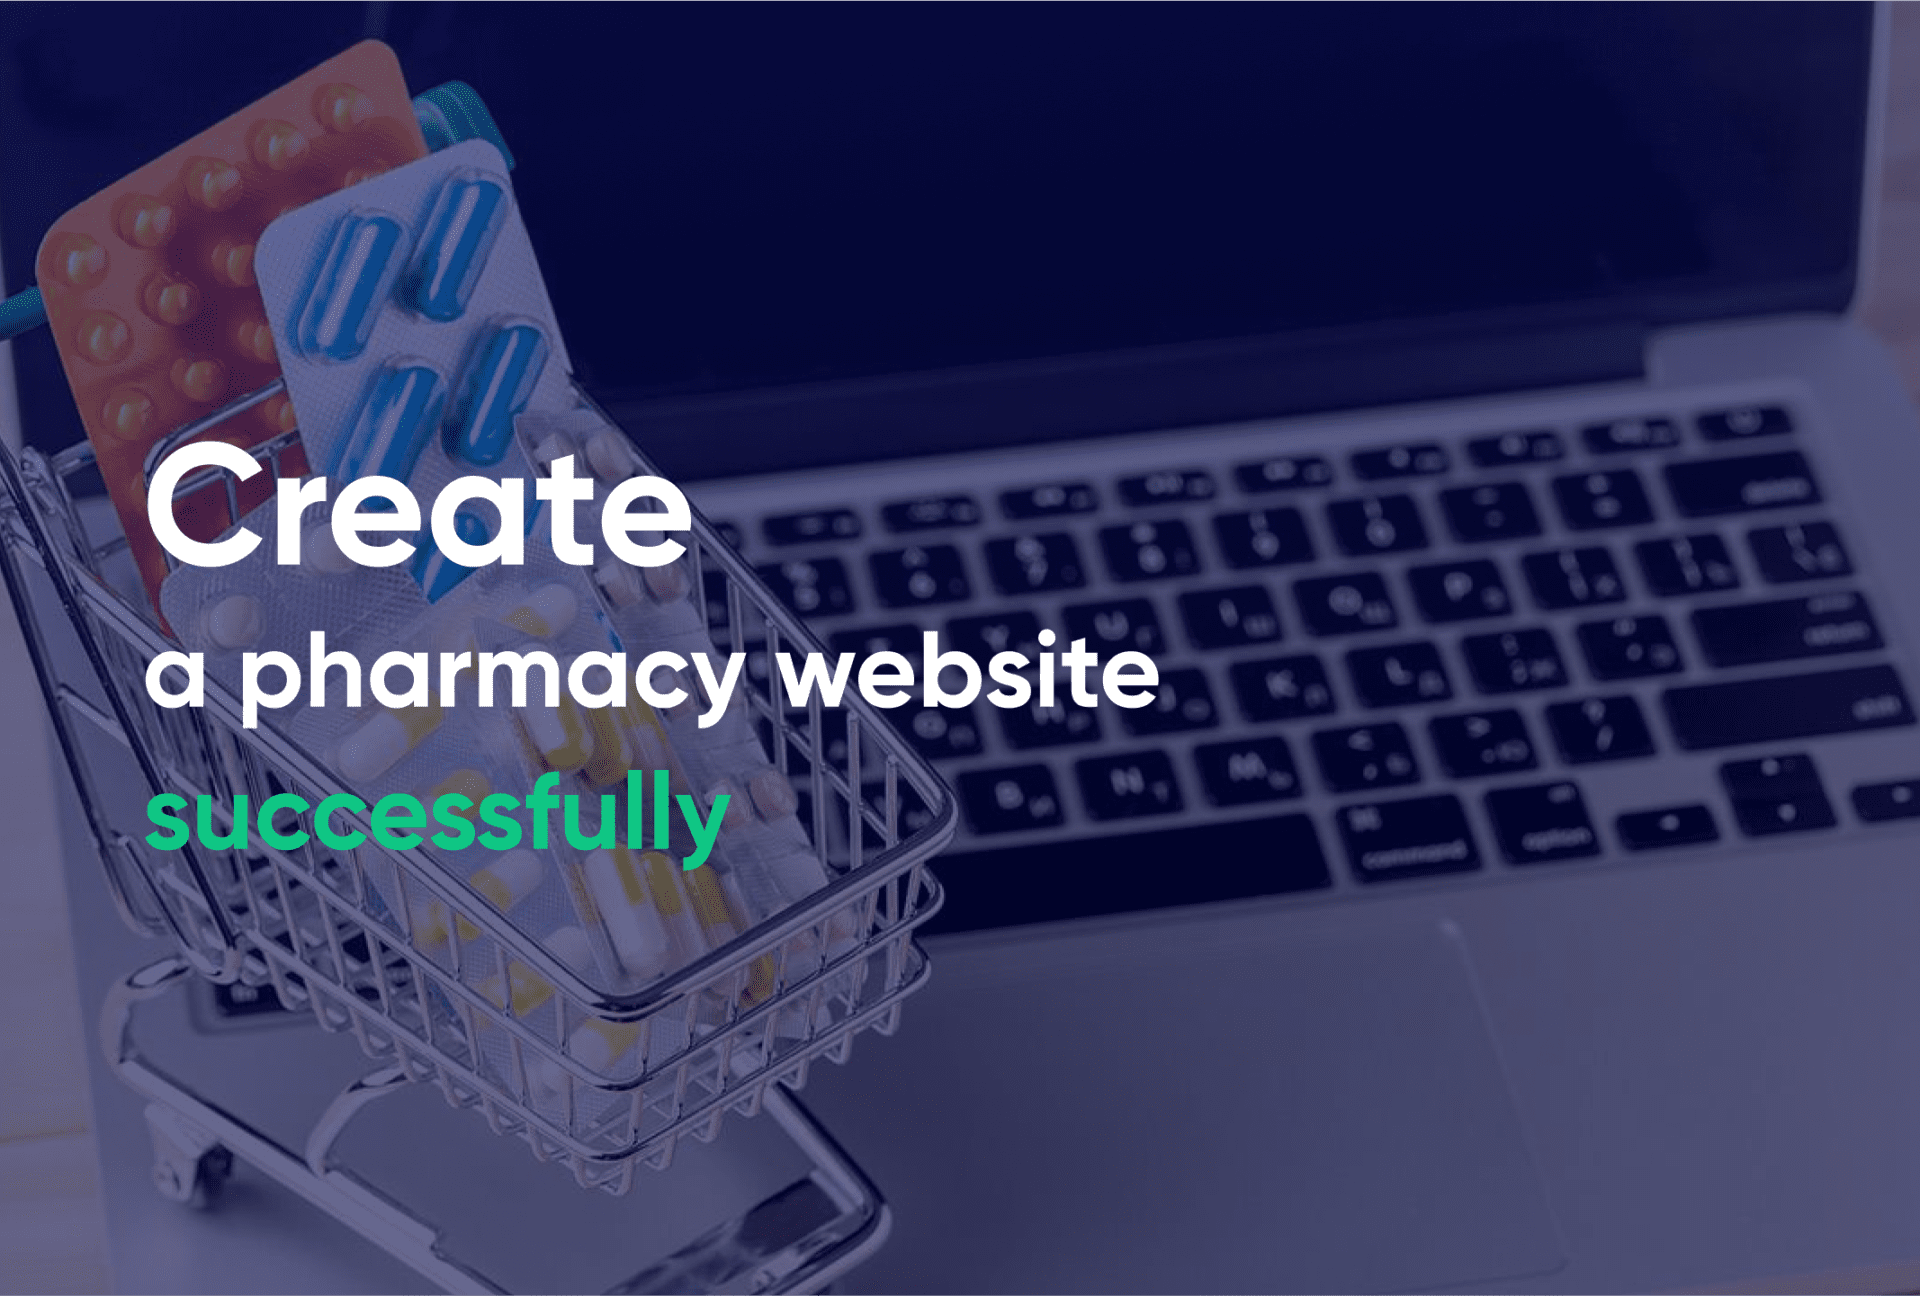 Create a pharmacy website successfully